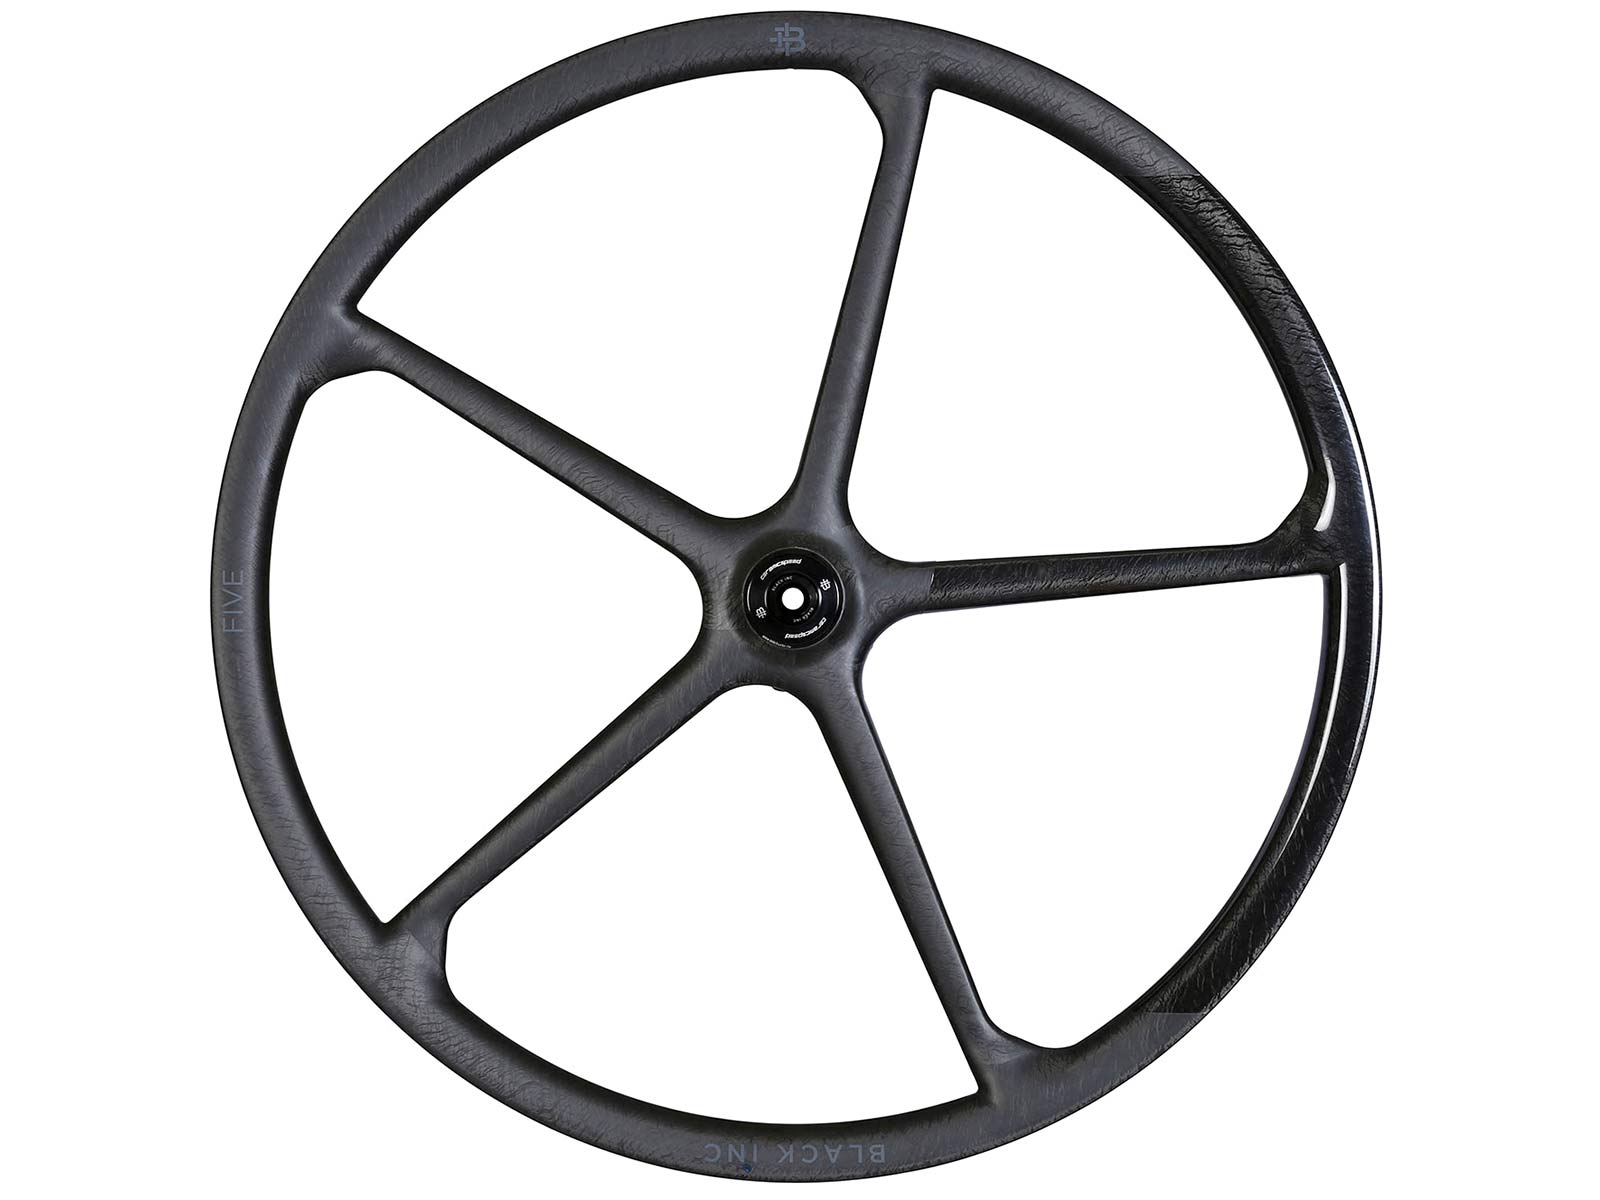 Black Inc FIVE aero carbon 5-spoke tubeless disc brake road bike wheels, side